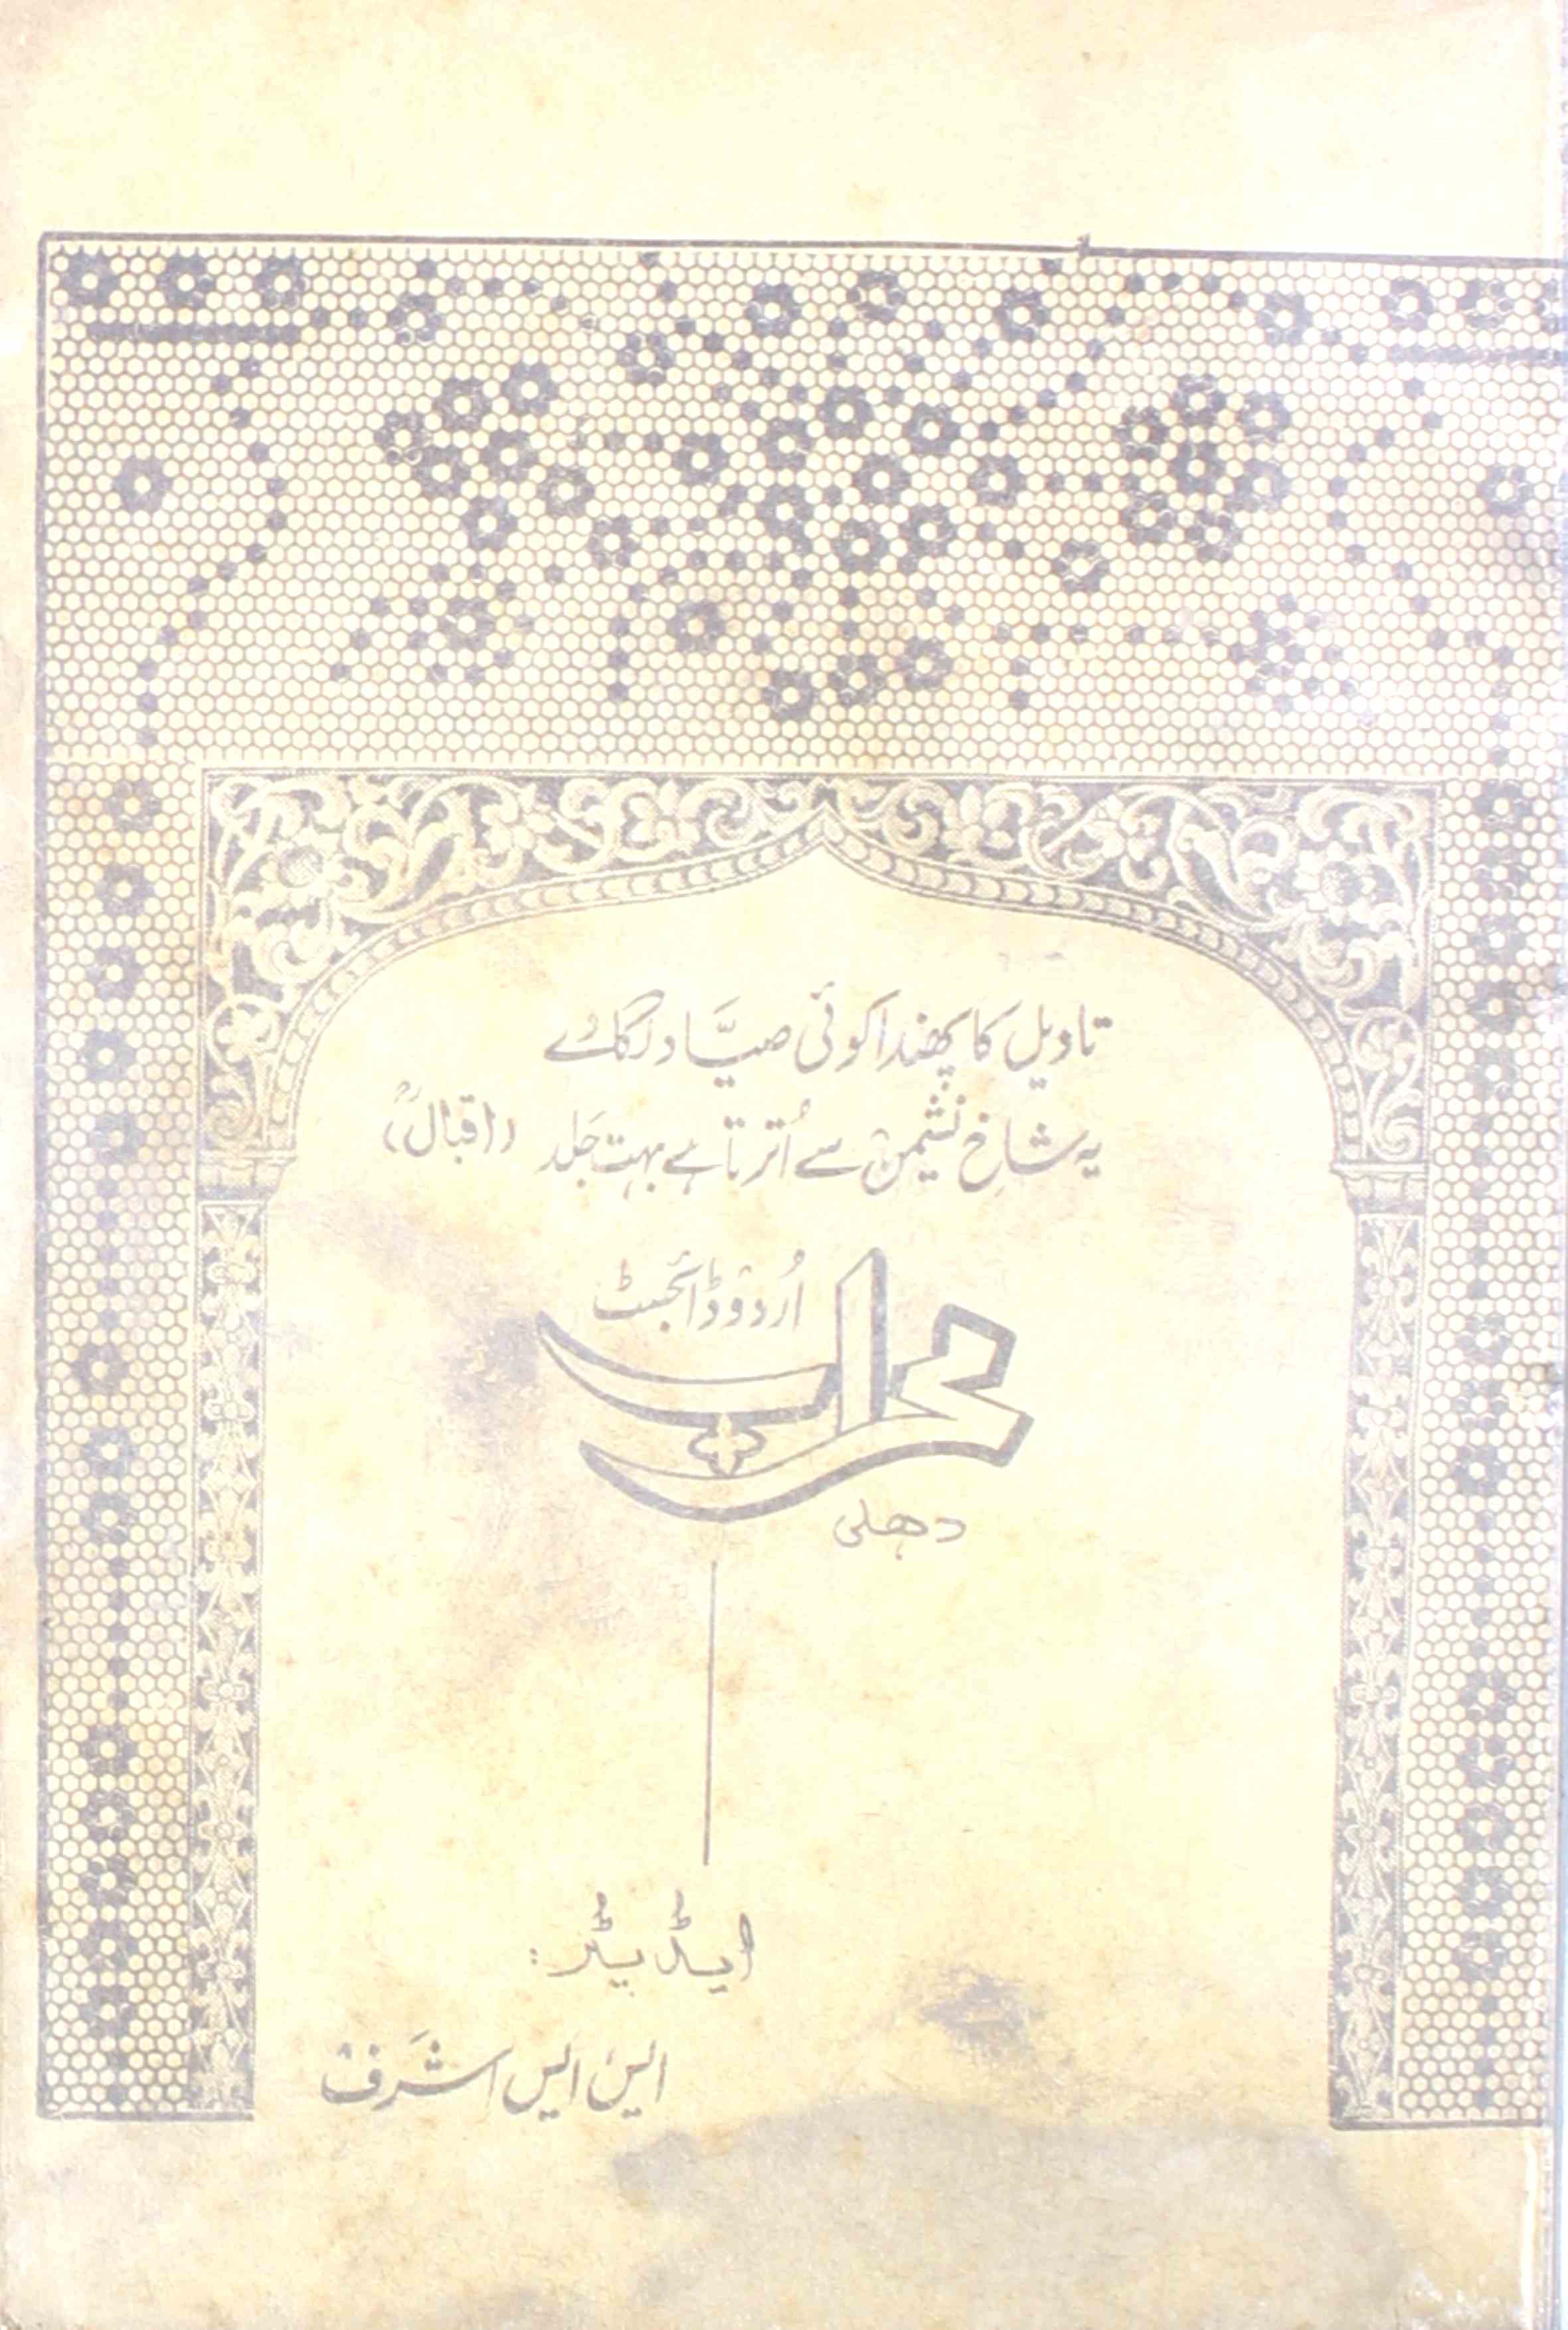 Mehraab Shumara 7-8-9 Sep 1975 SVK-Shumara Number-007,008,009